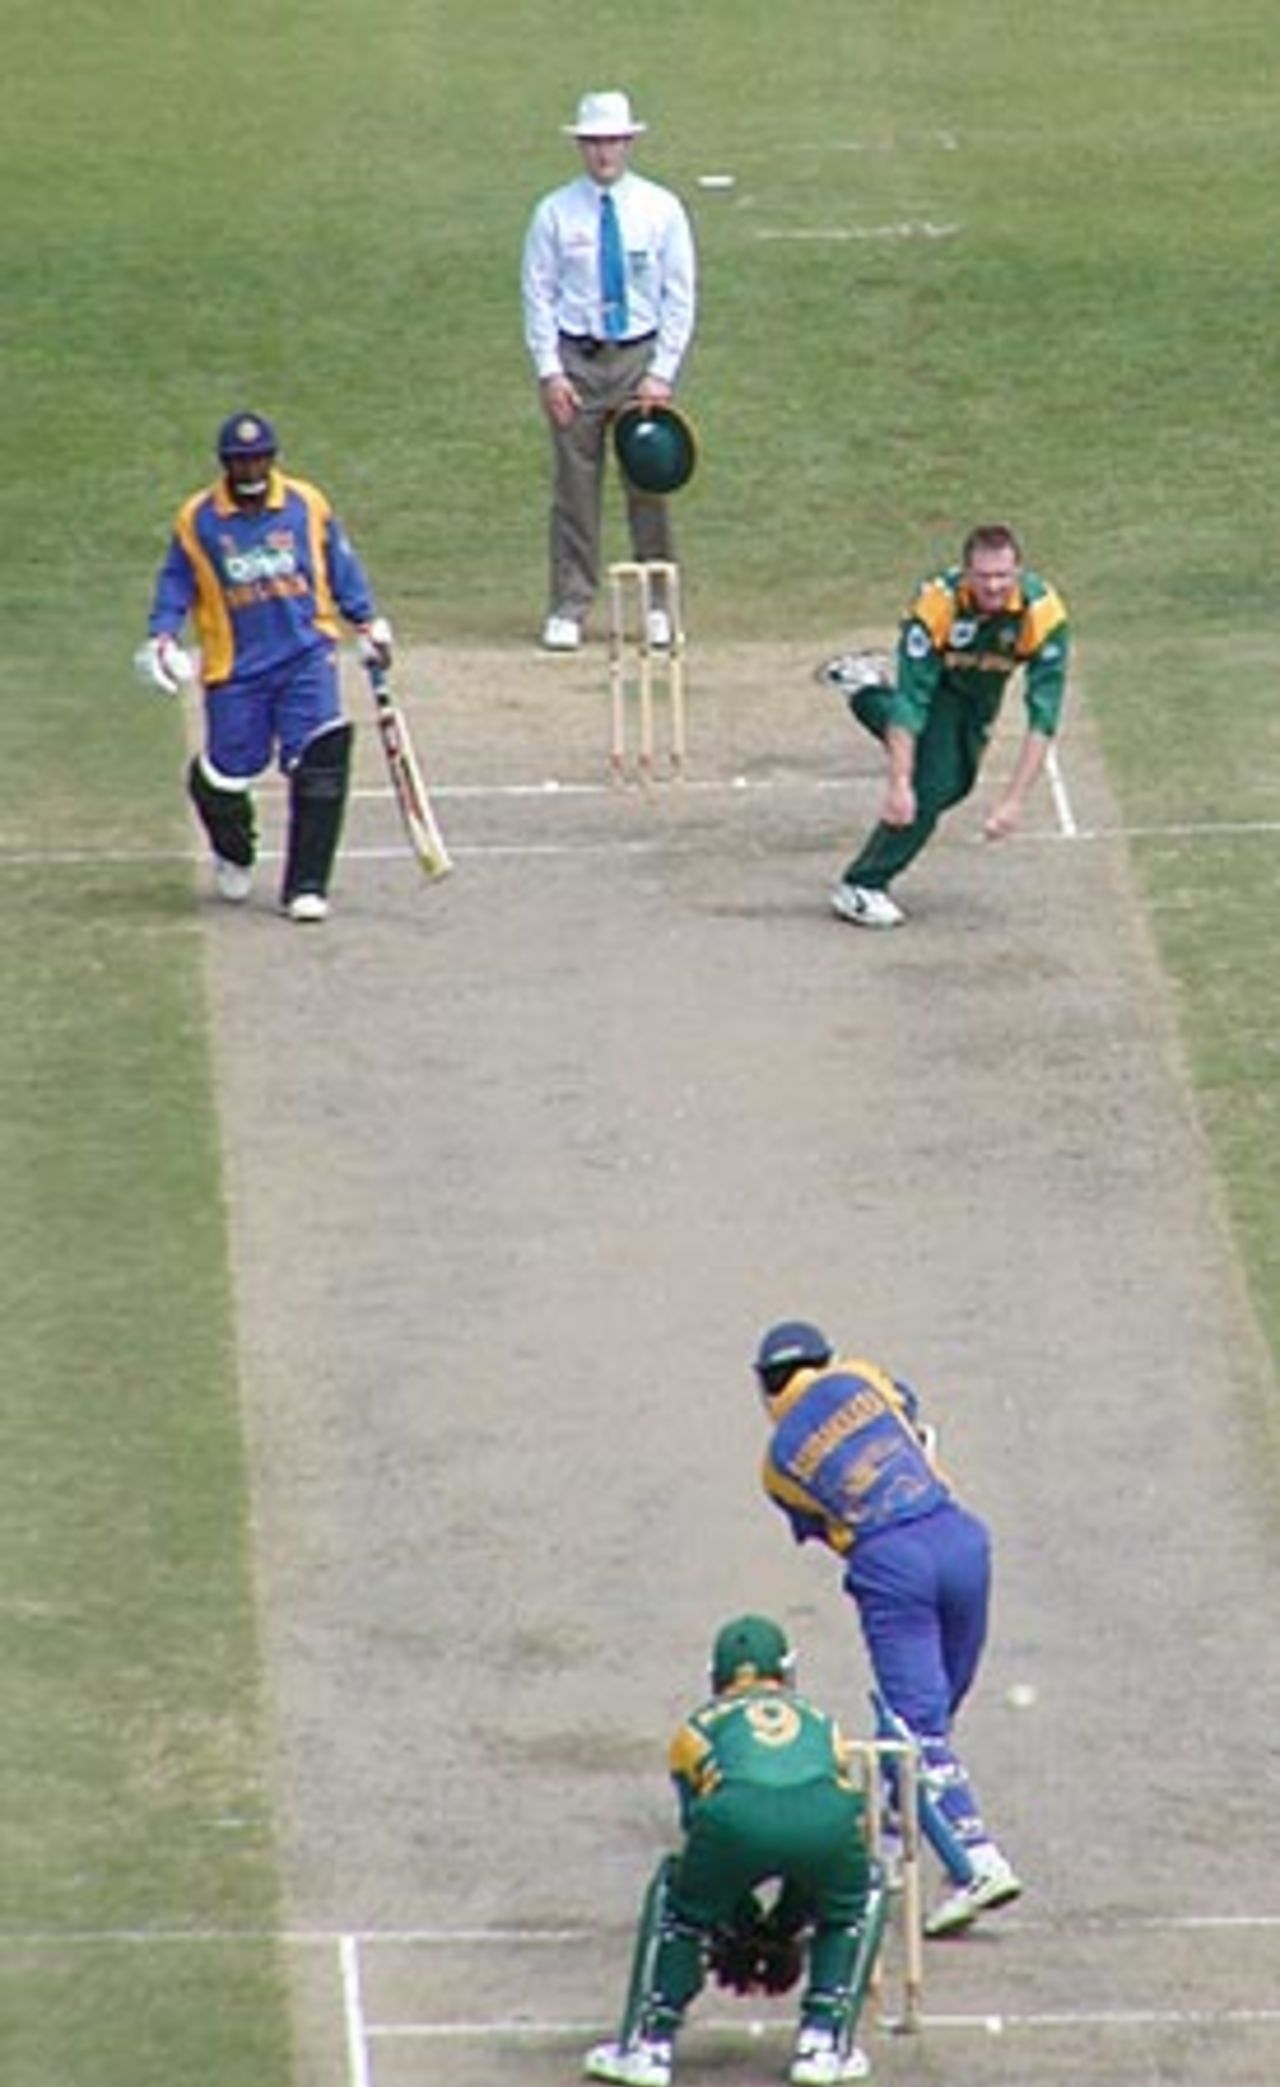 Klusener bowling to Sangakkara, Morocco Cup, 3rd ODI at Tangiers, South Africa v Sri Lanka, 15 Aug 2002